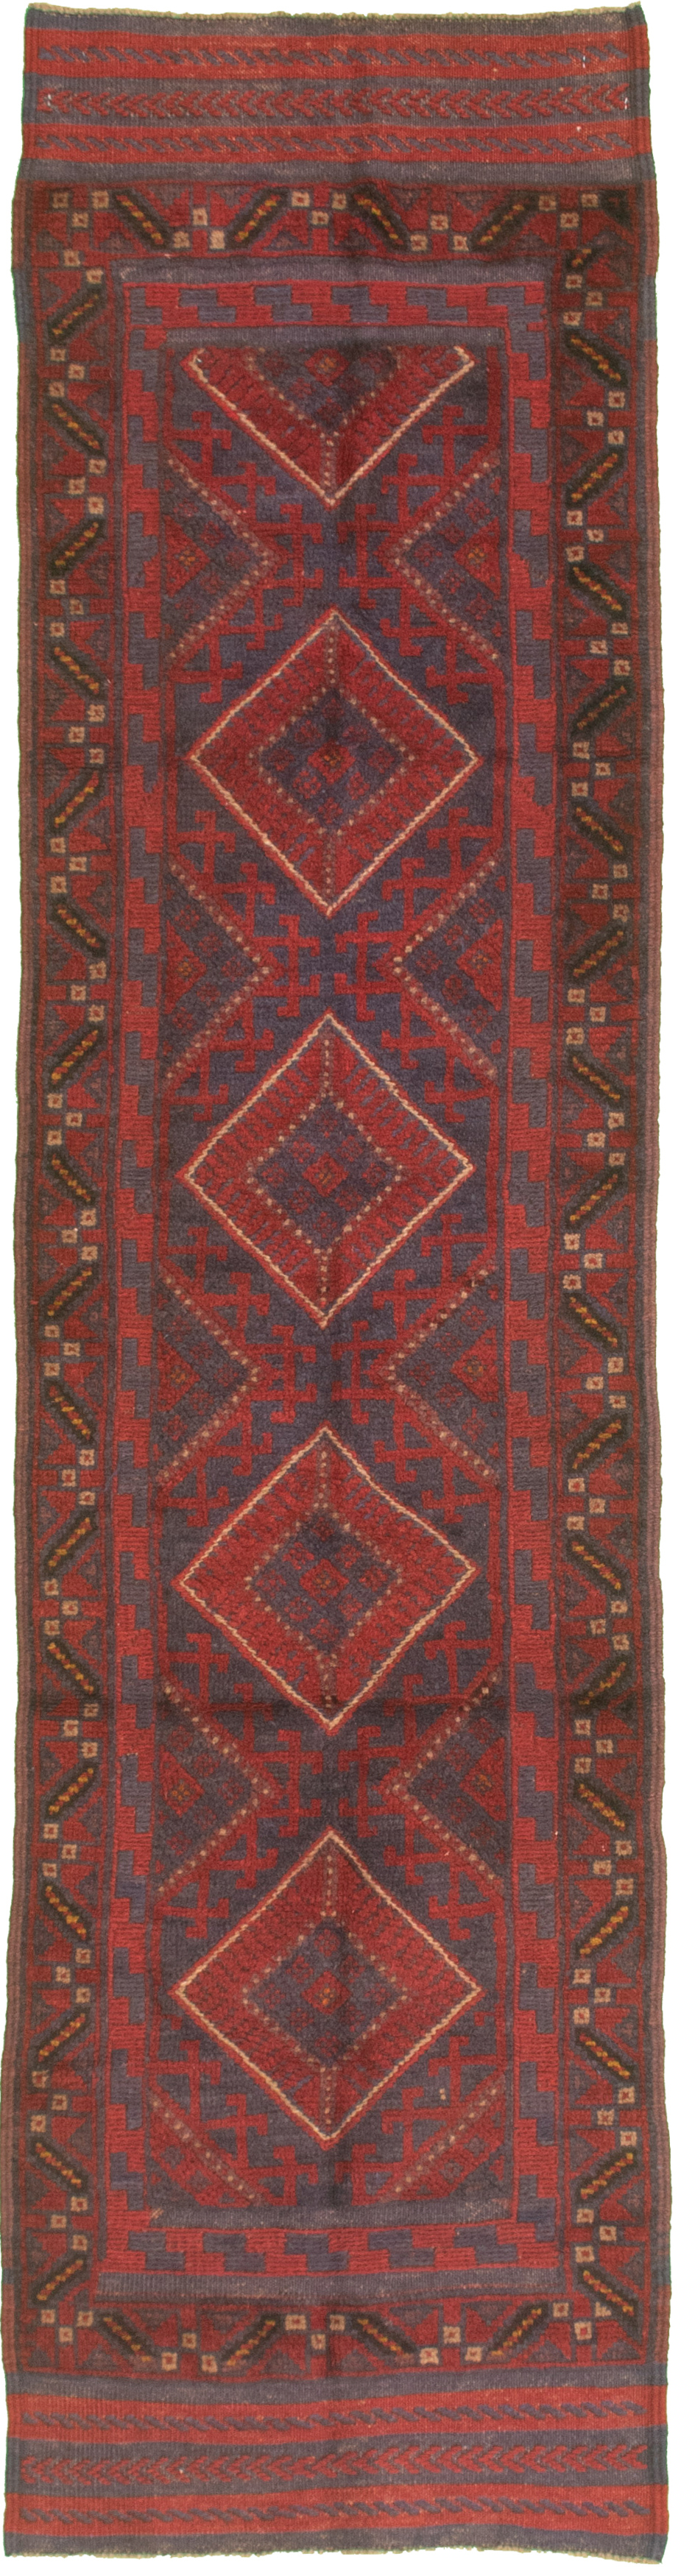 Hand-knotted Tajik Caucasian Red Wool Rug 2'2" x 8'6"  Size: 2'2" x 8'6"  